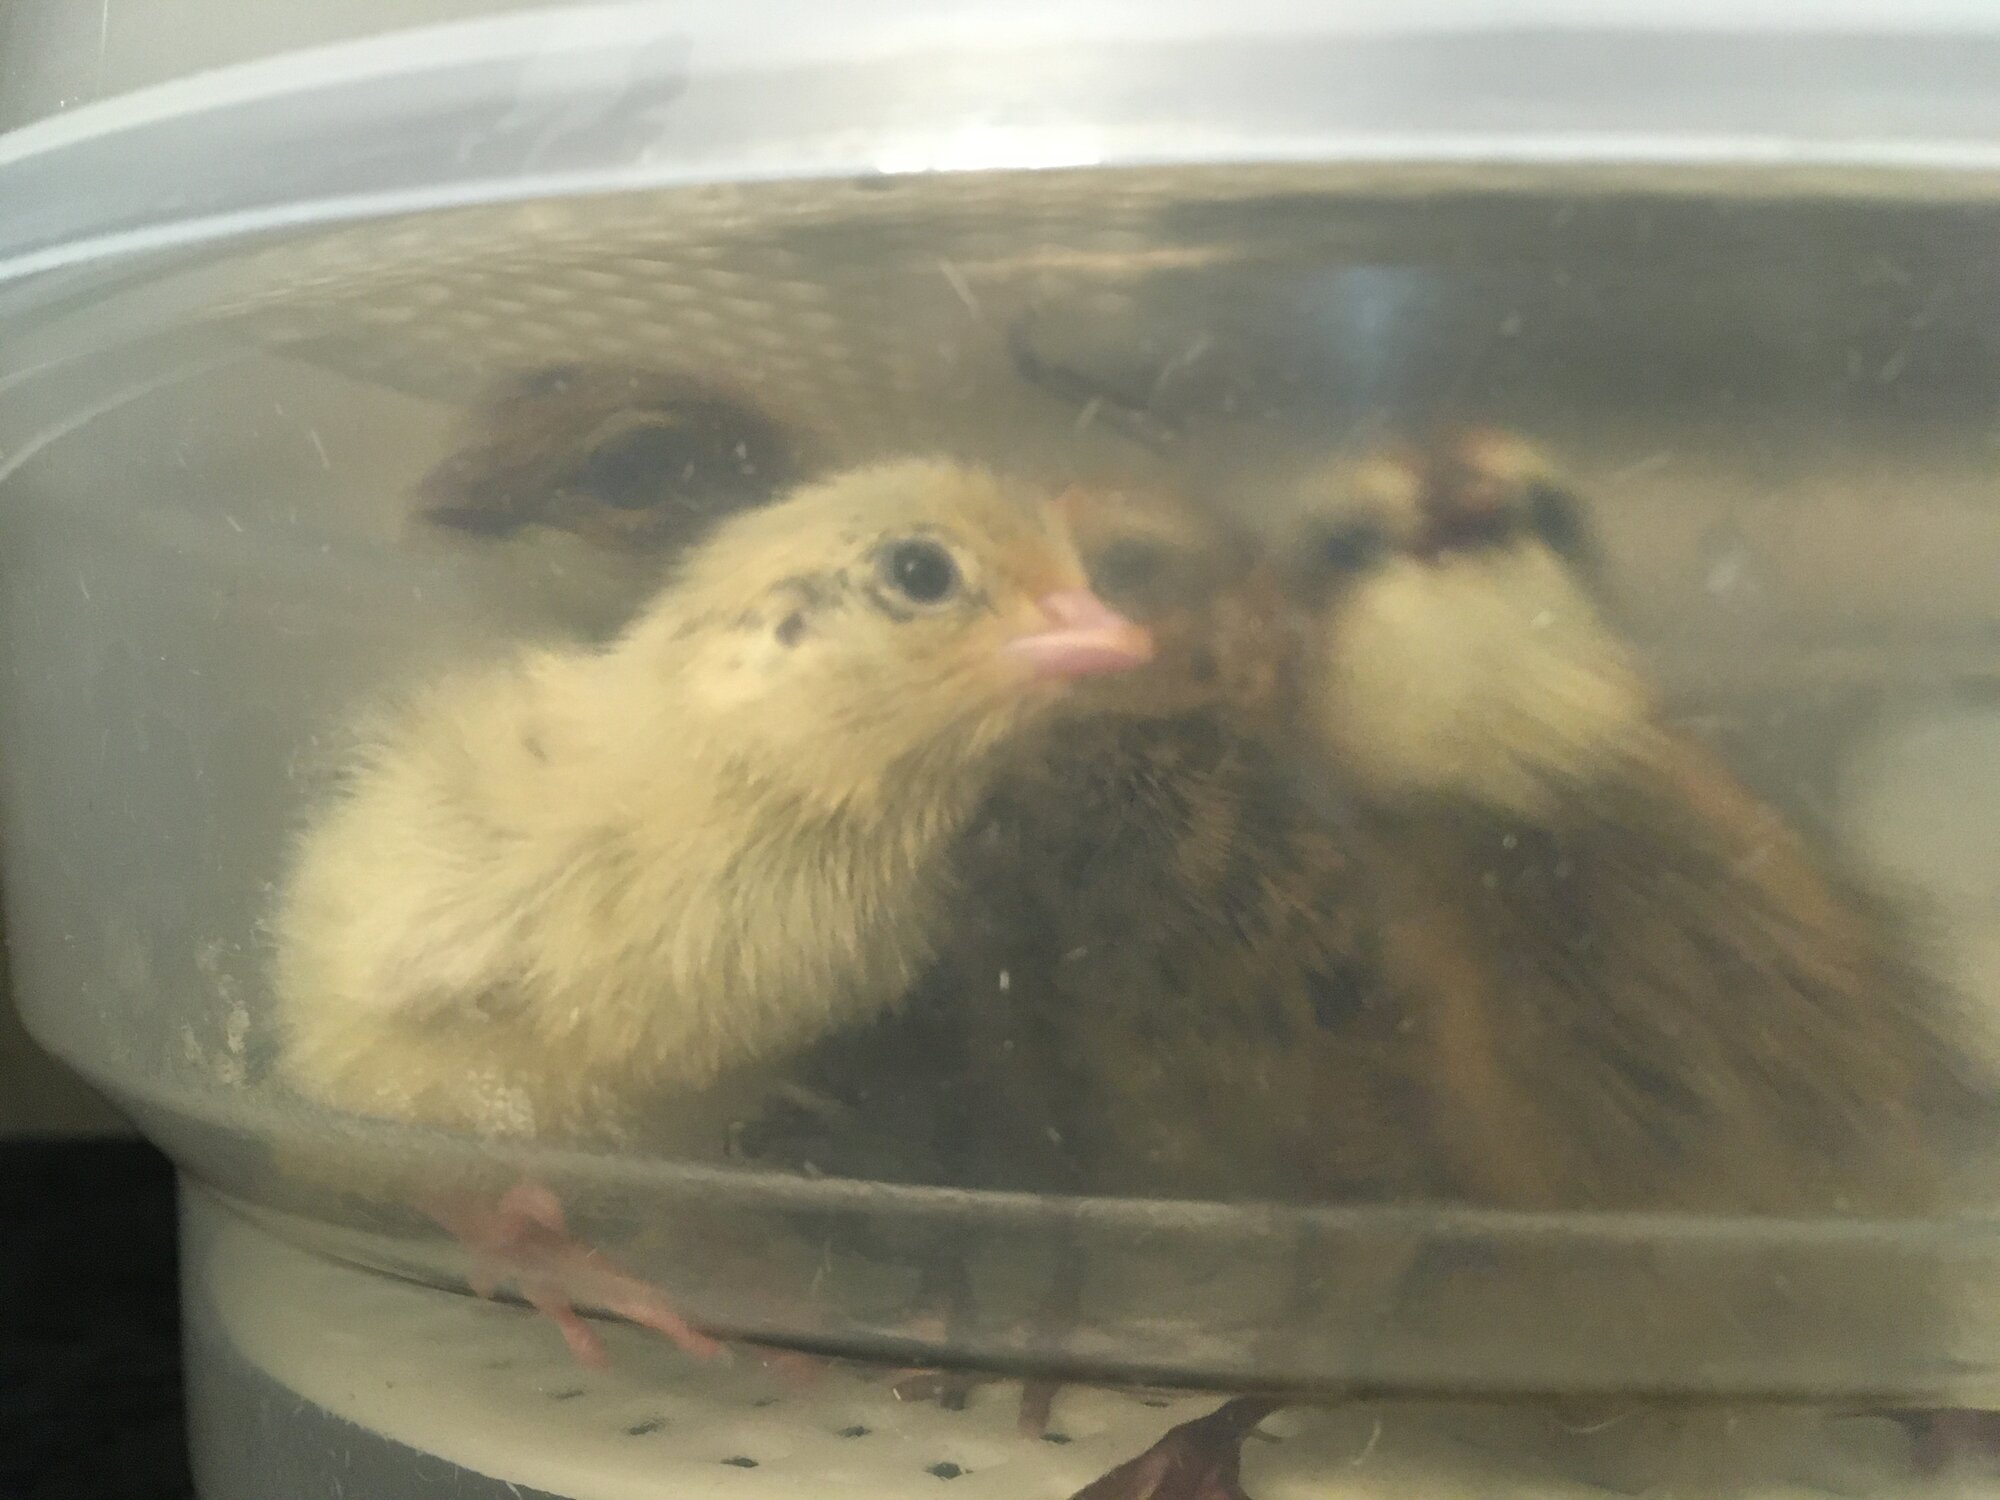 Quail chicks in incubator